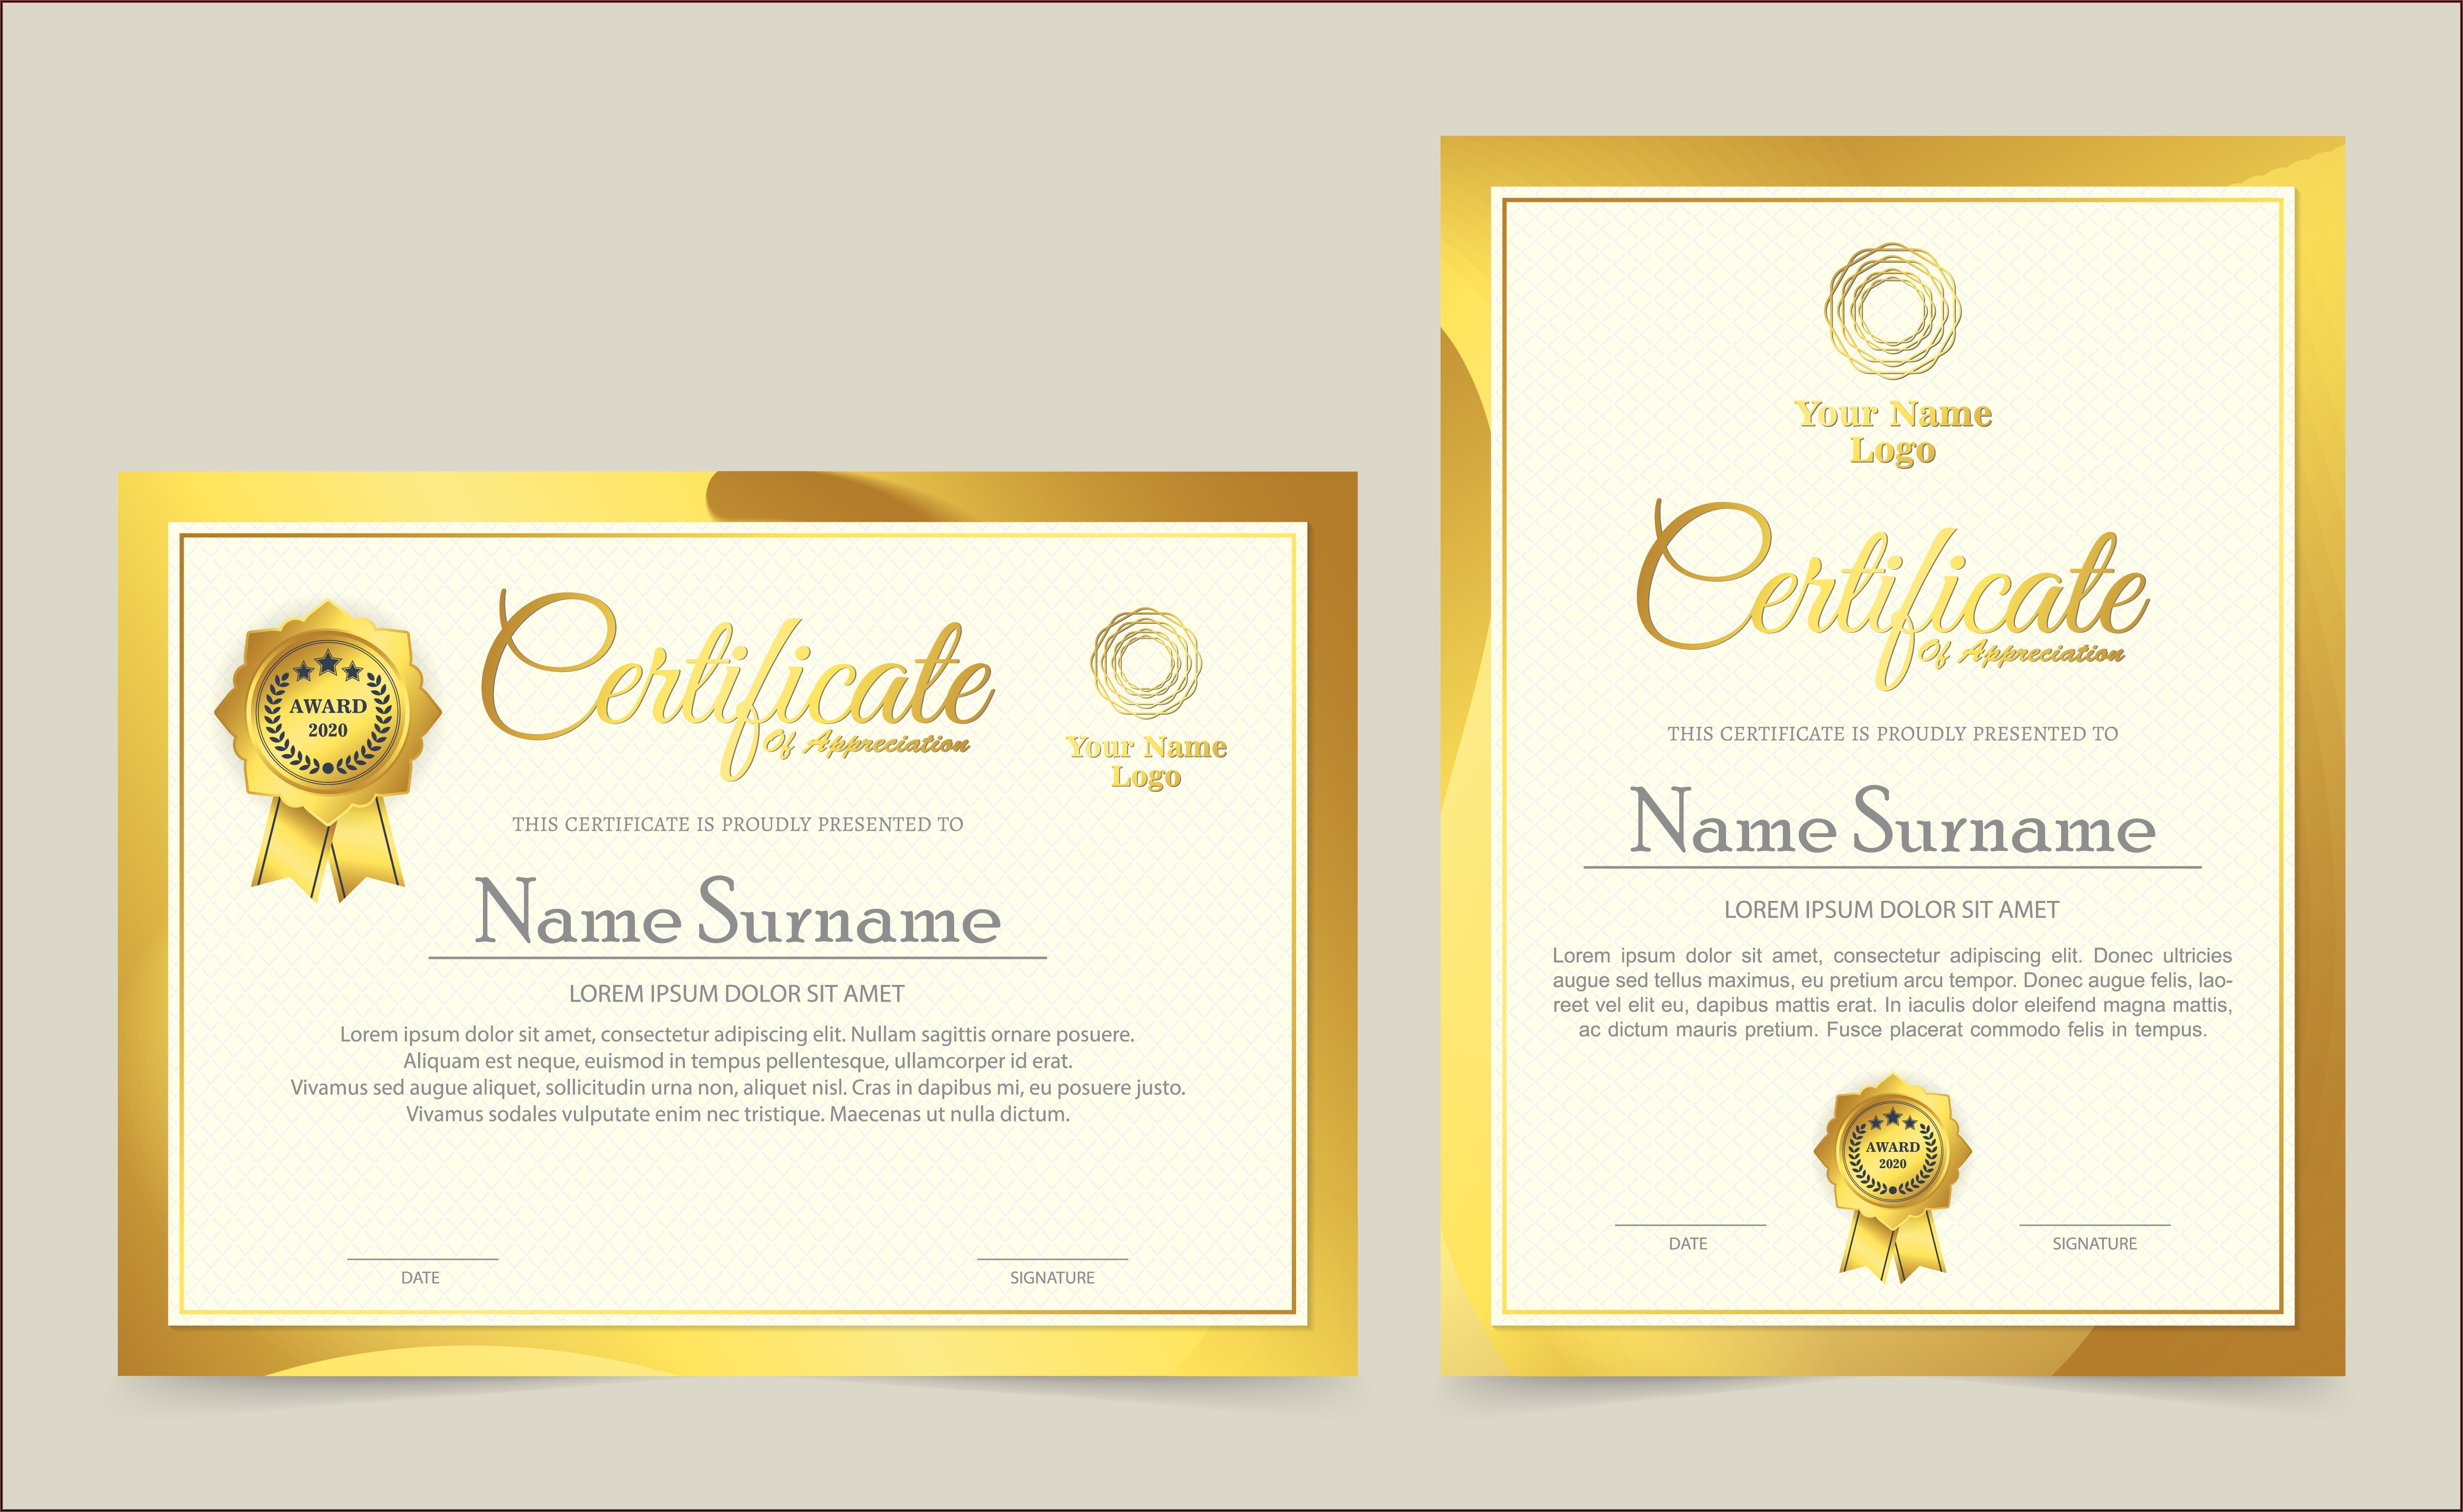 Professional Certificate Design Templates